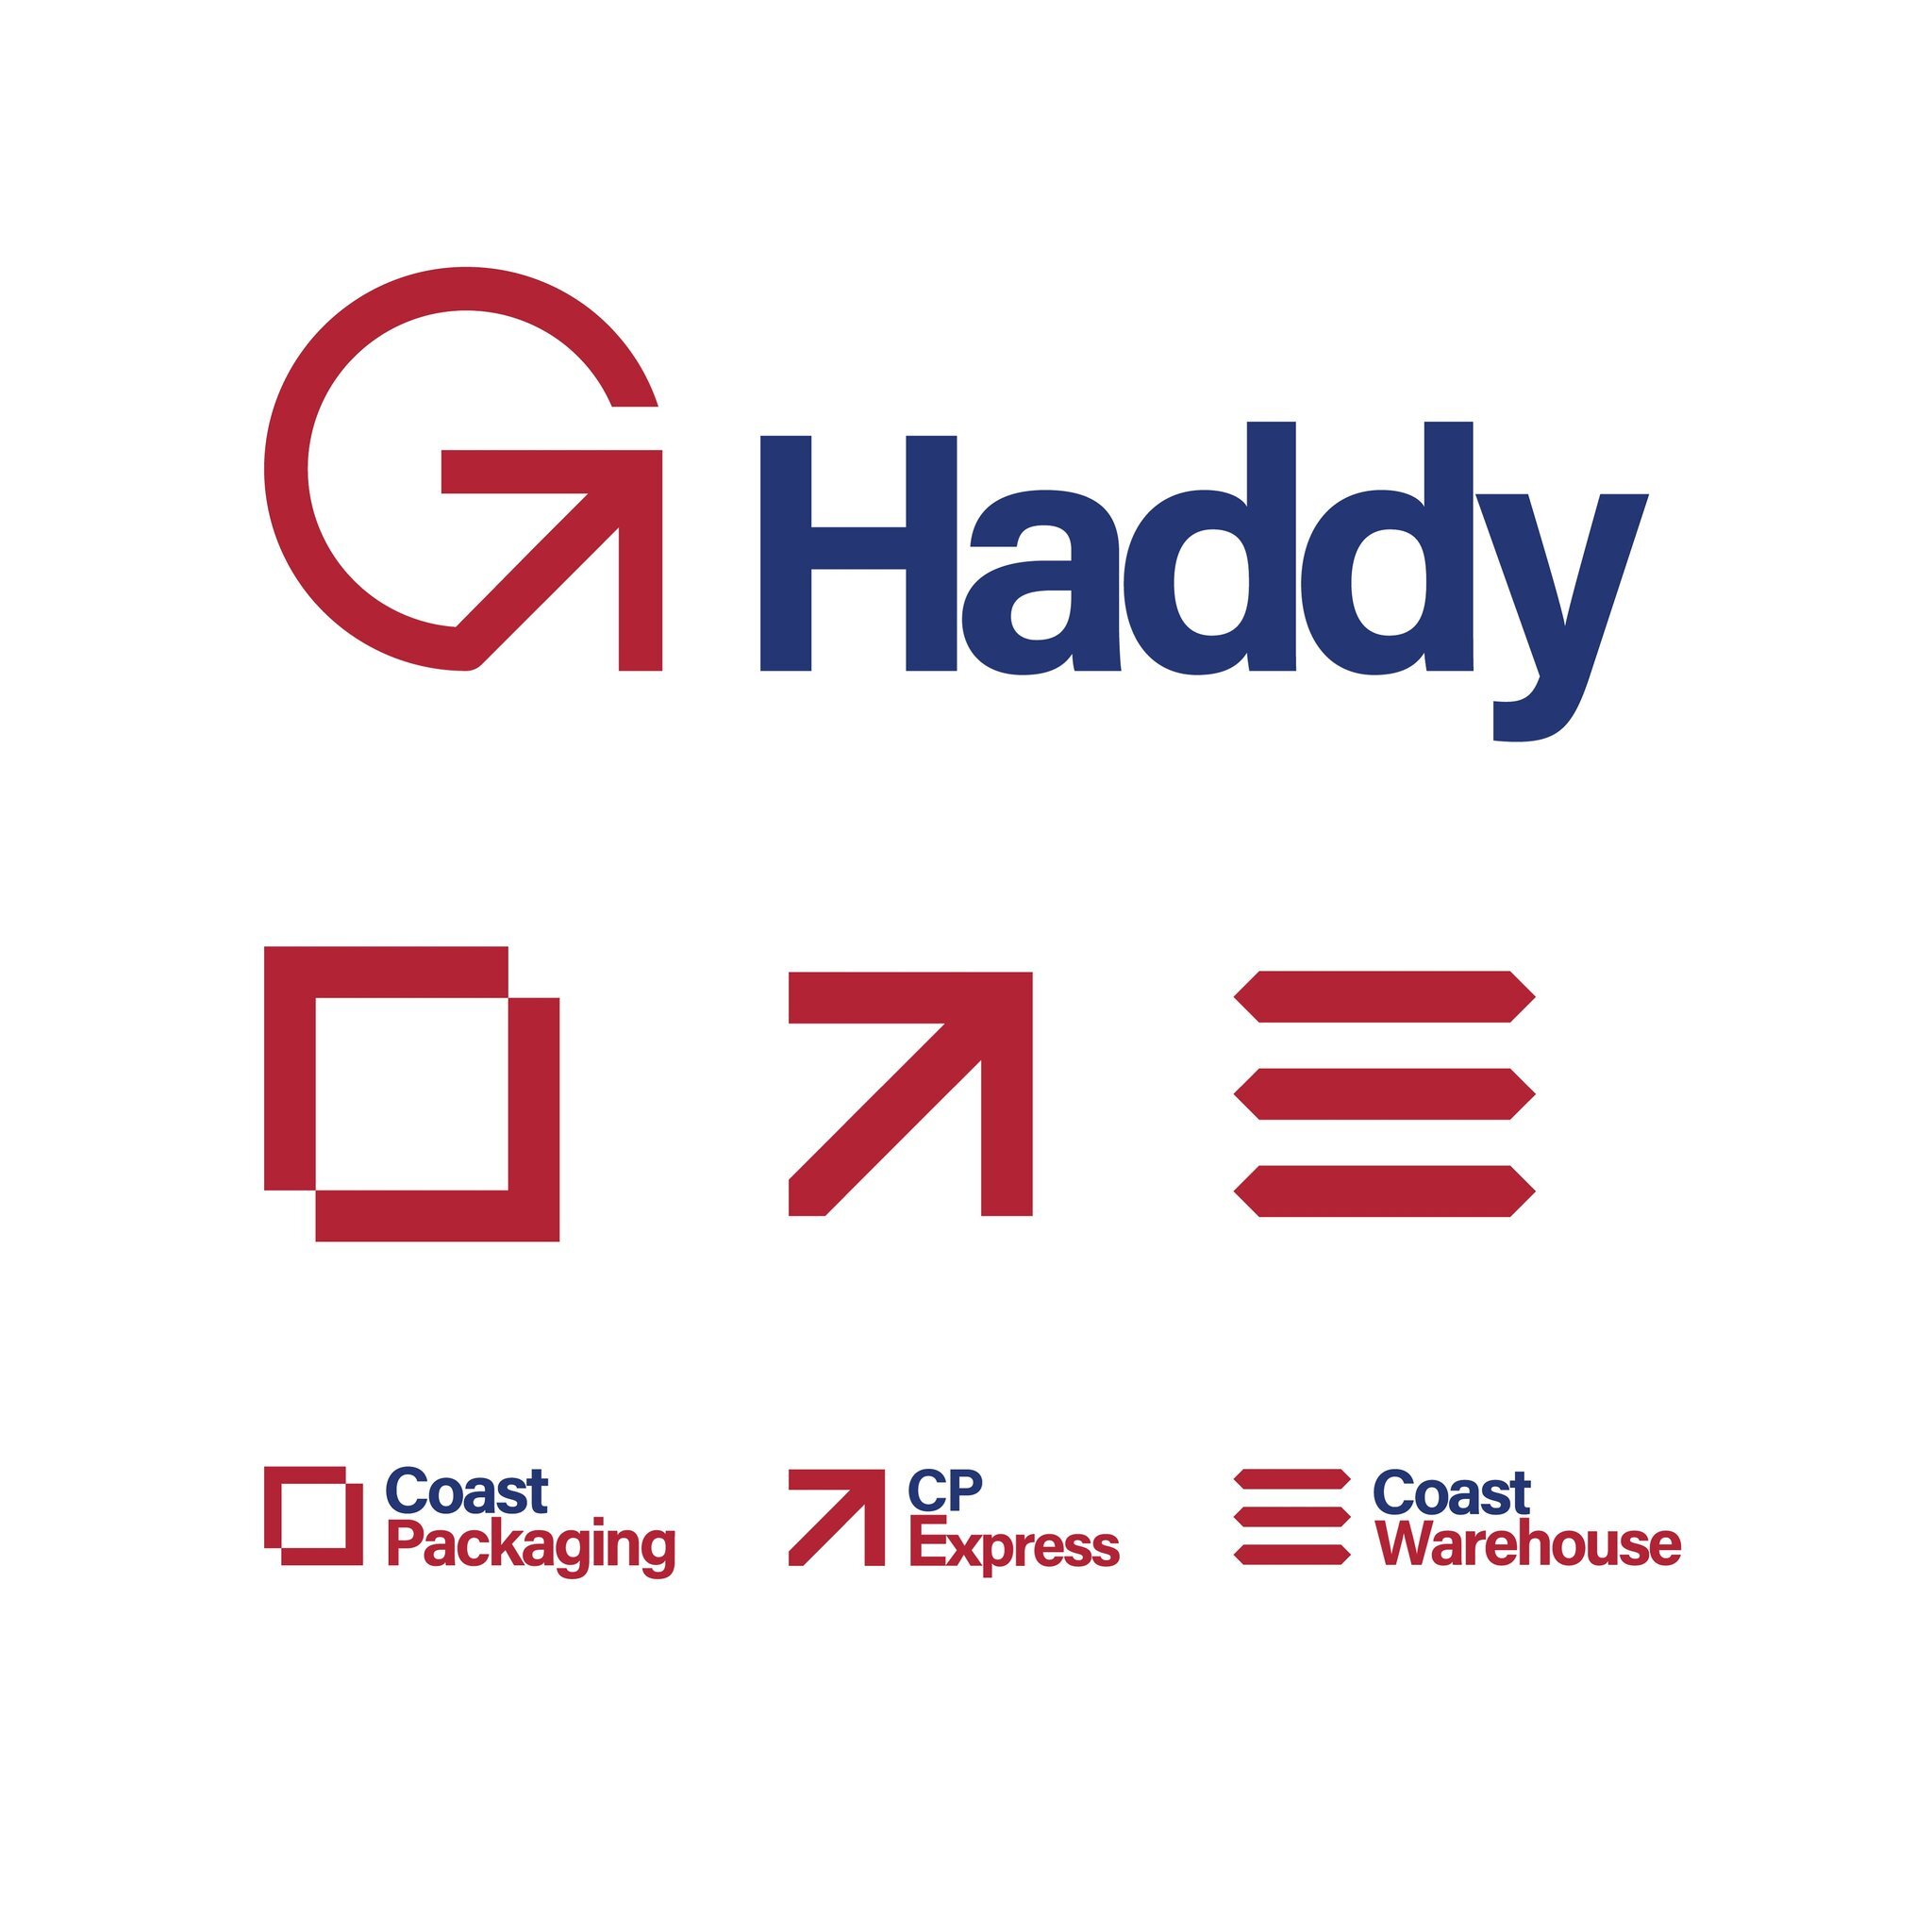 Brand Identity Proposal for JGHaddy, a Warehousing &amp; Distribution Company

#branding #brandidentity #logodesign #graphicdesign #lwstudios